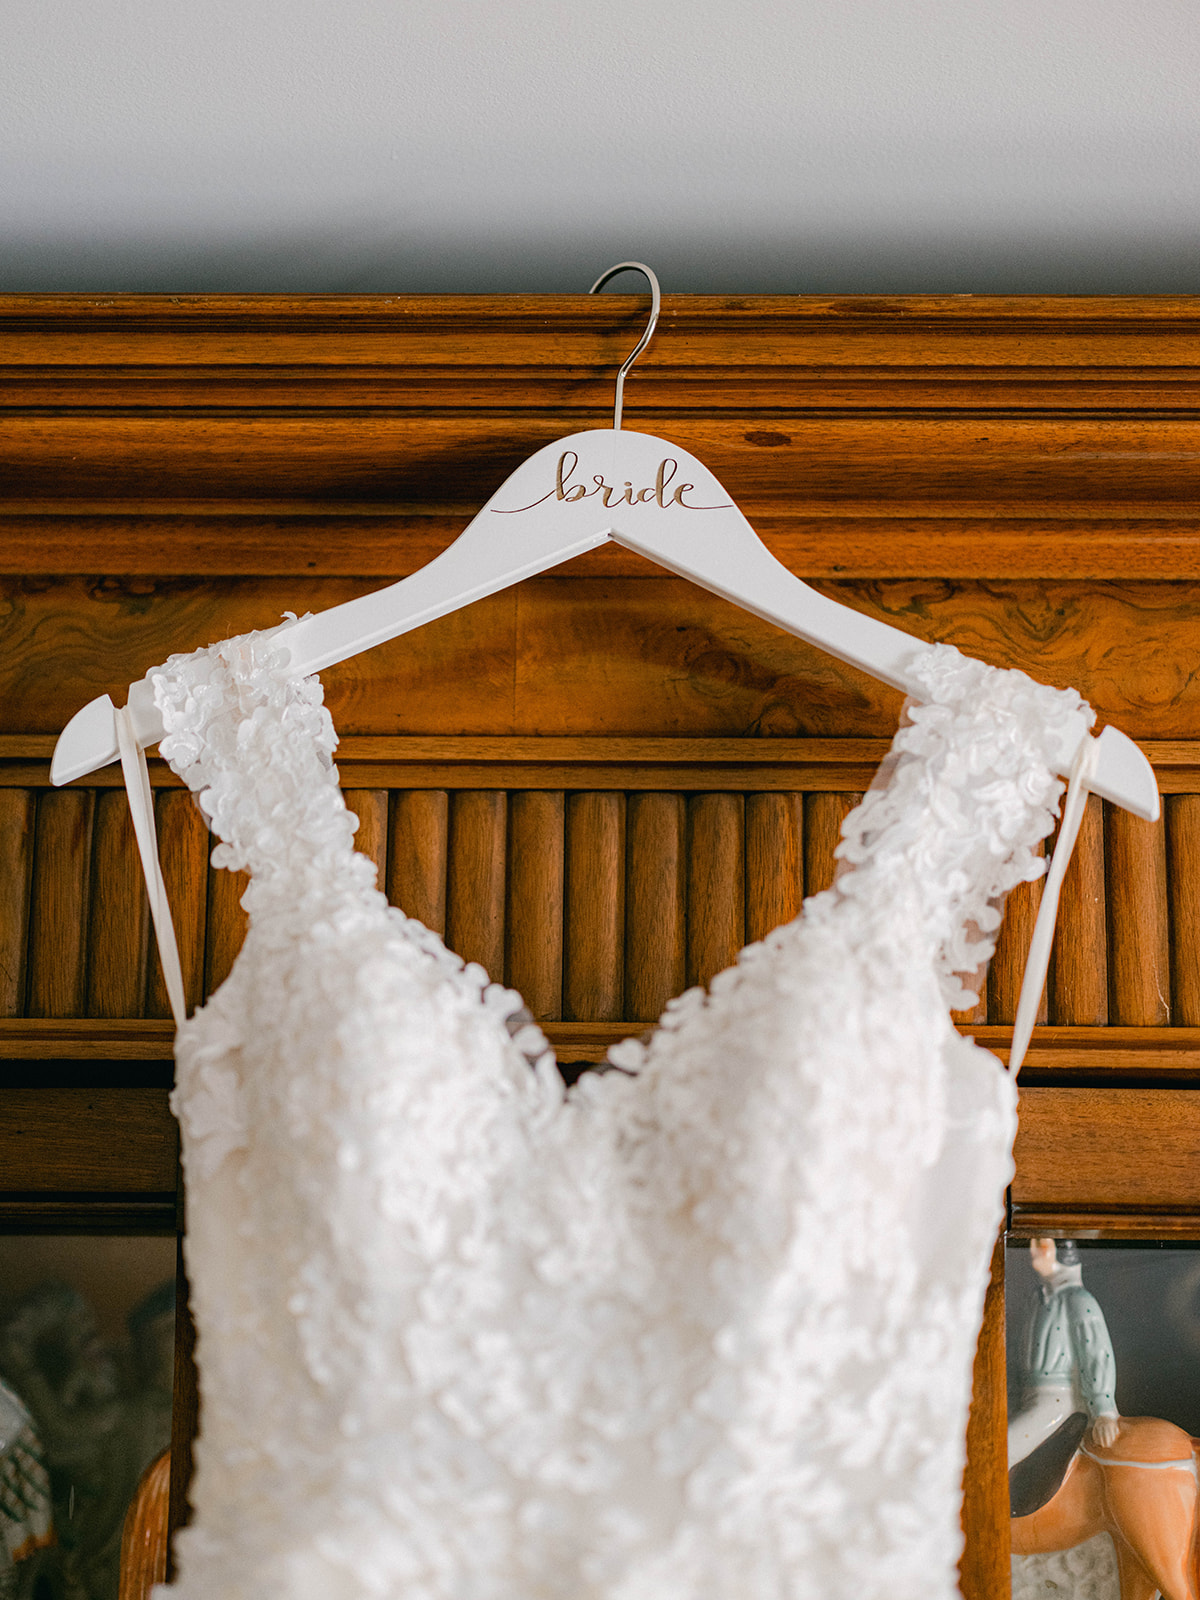 Wedding Dress-Lazaro "Vienna" gown from L'elite/Musette Bridal Boutique, Boston